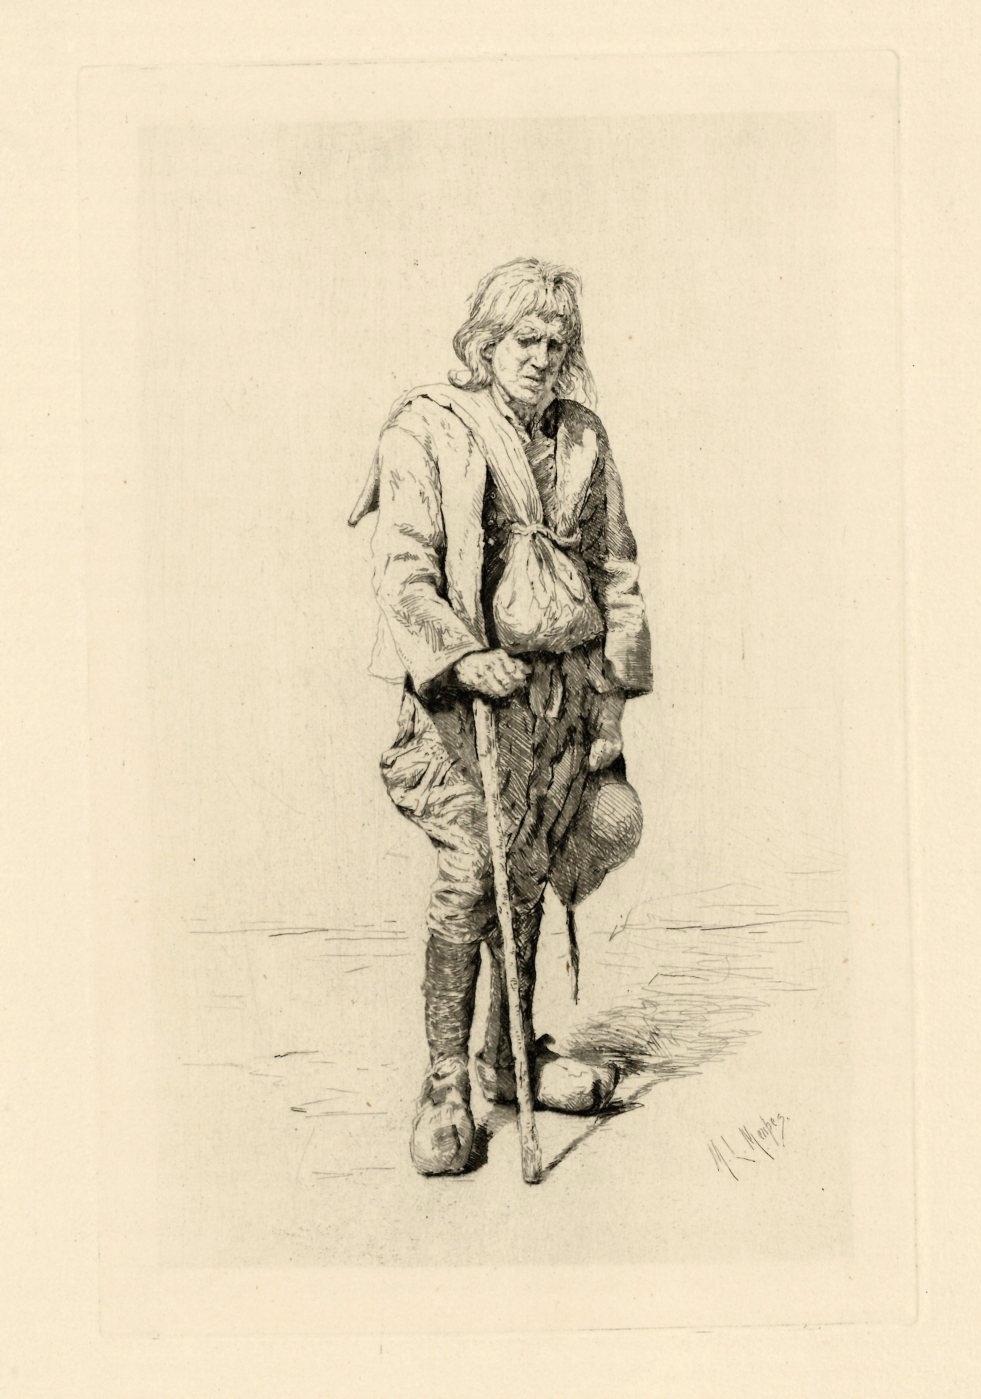 "A Breton Beggar" original etching - Print by Mortimer Menpes